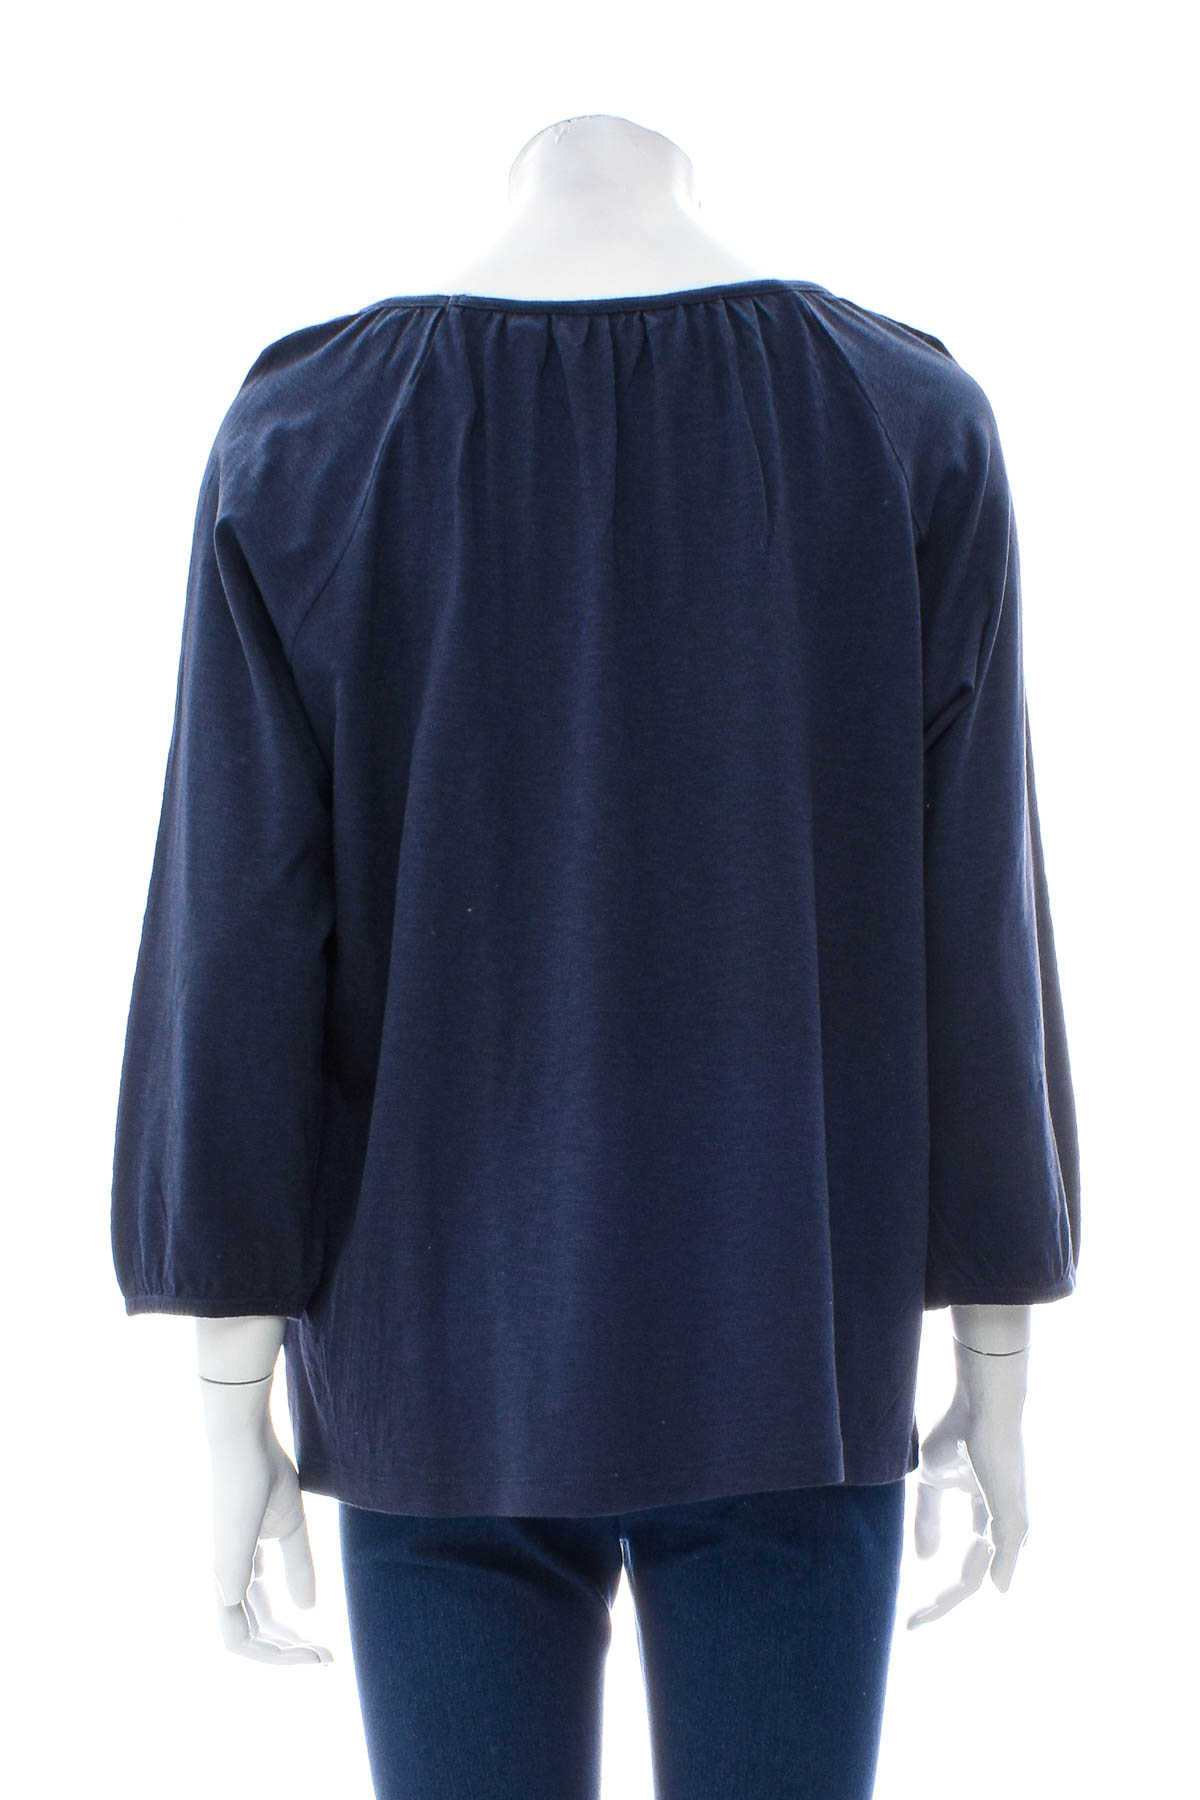 Women's blouse - Essentials by Tchibo - 1